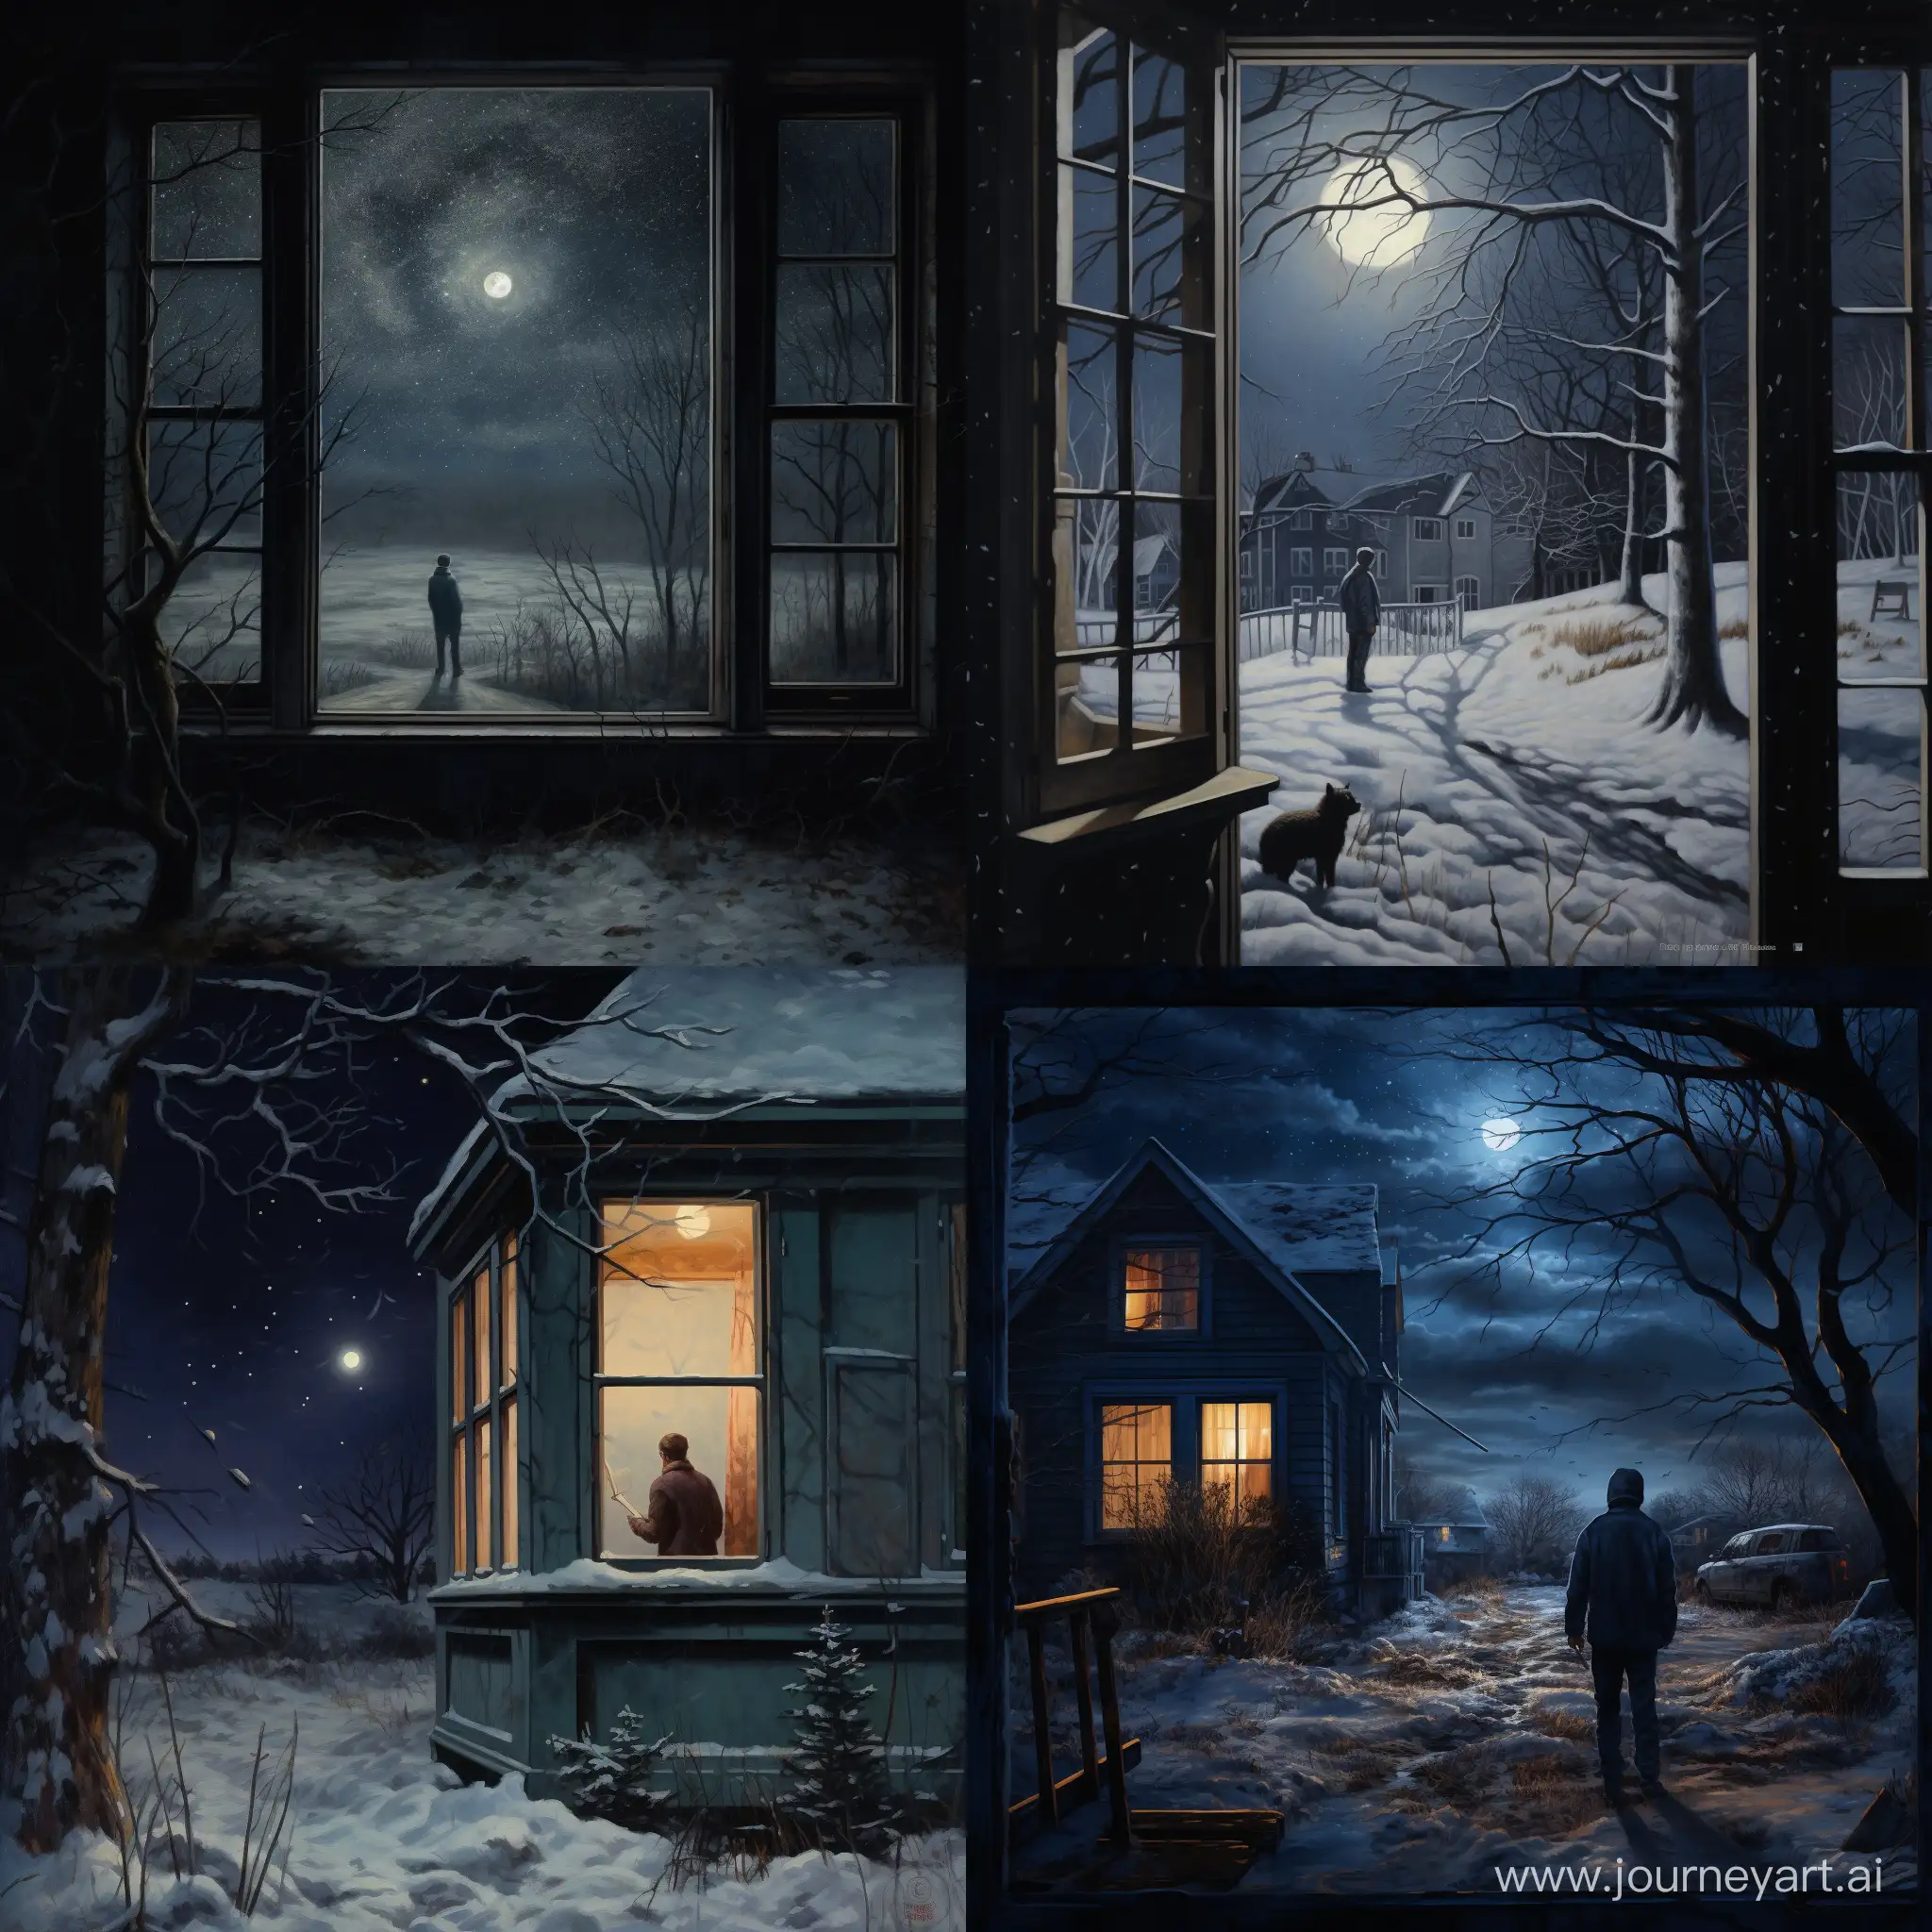 Solitary-Figure-Admiring-Moonlit-Winter-Night